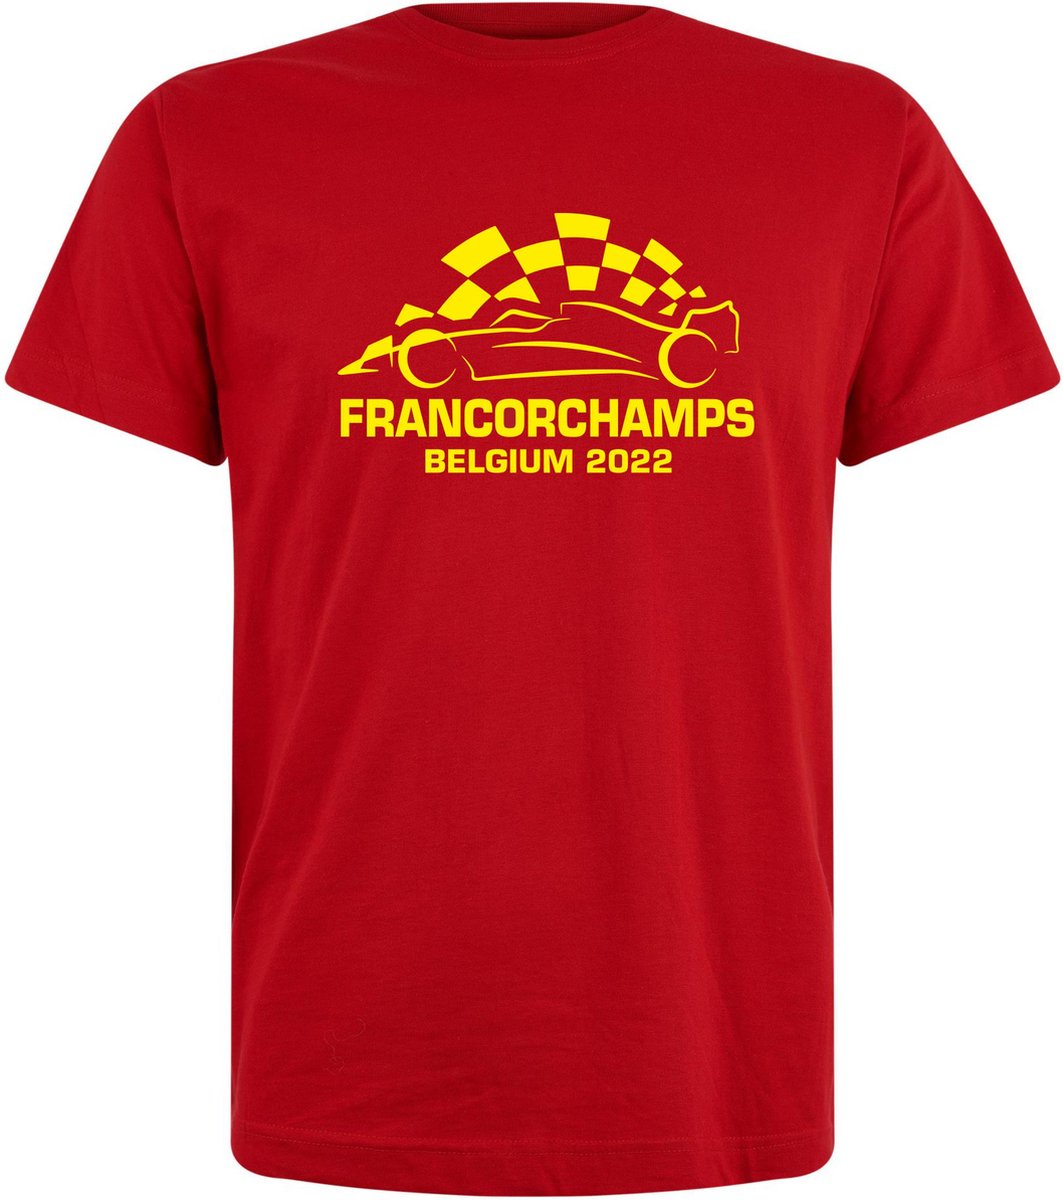 T-shirt kinderen Francorchamps Belgium 2022 met raceauto | Max Verstappen / Red Bull Racing / Formule 1 fan | Grand Prix Circuit Spa-Francorchamps | kleding shirt | Rood | maat 92